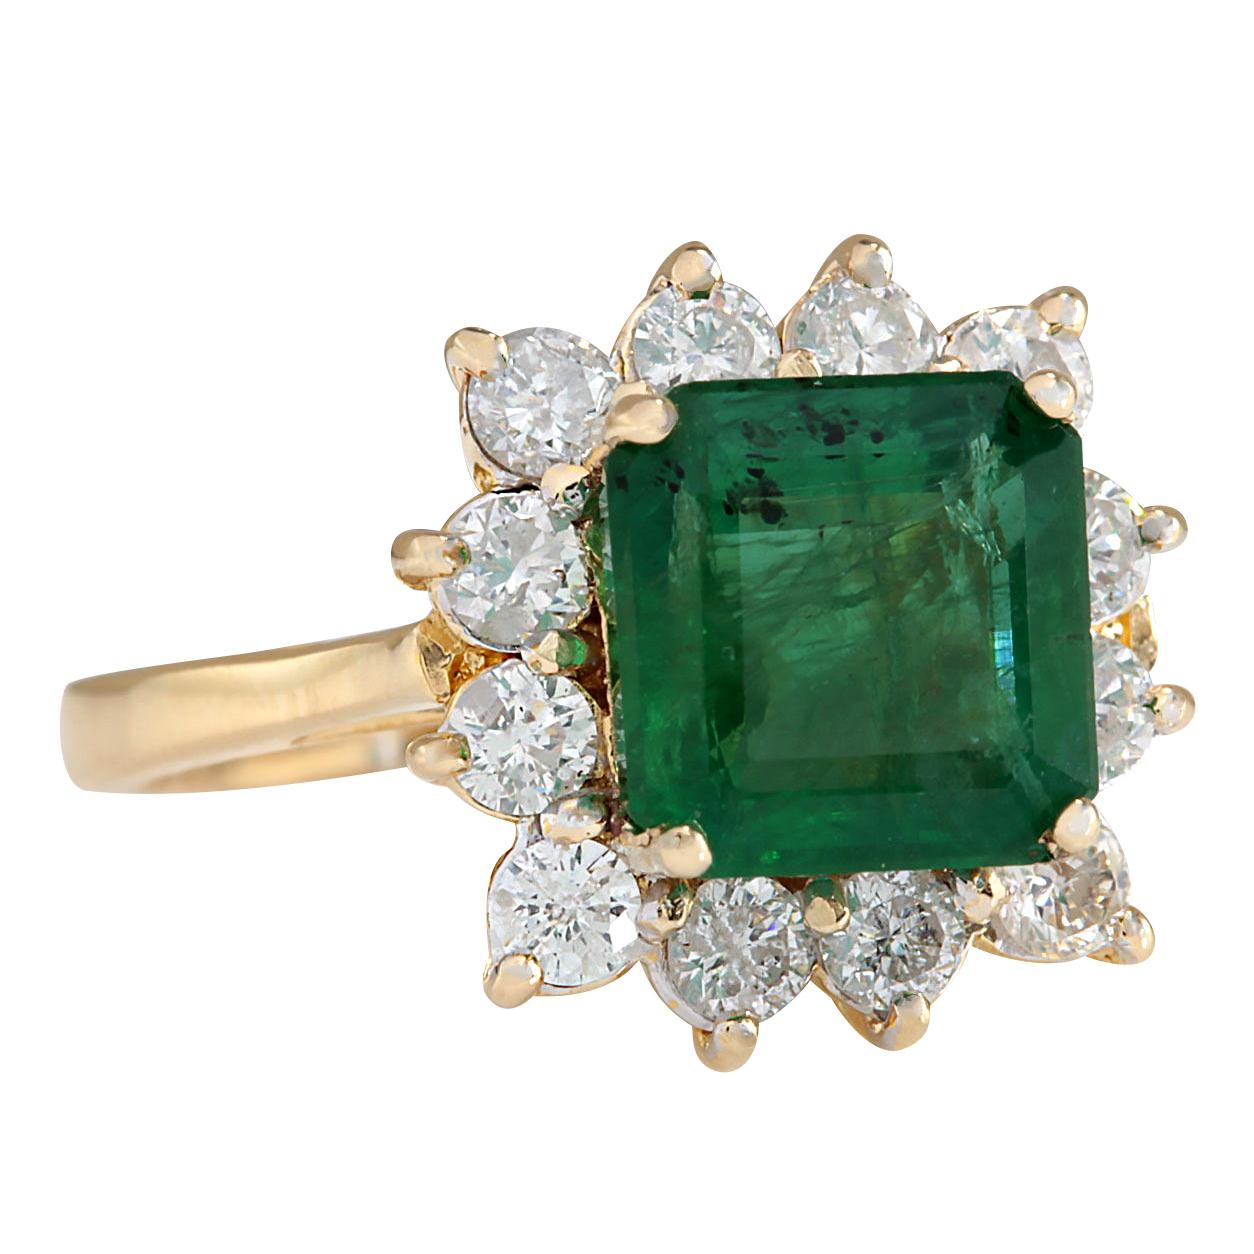 4.40 Carat Natural Emerald 14 Karat Yellow Gold Diamond Ring
Stamped: 14K Yellow Gold
Total Ring Weight: 5.0 Grams
Total Natural Emerald Weight is 3.40 Carat (Measures: 8.50x8.50 mm)
Color: Green
Total Natural Diamond Weight is 1.00 Carat
Color: